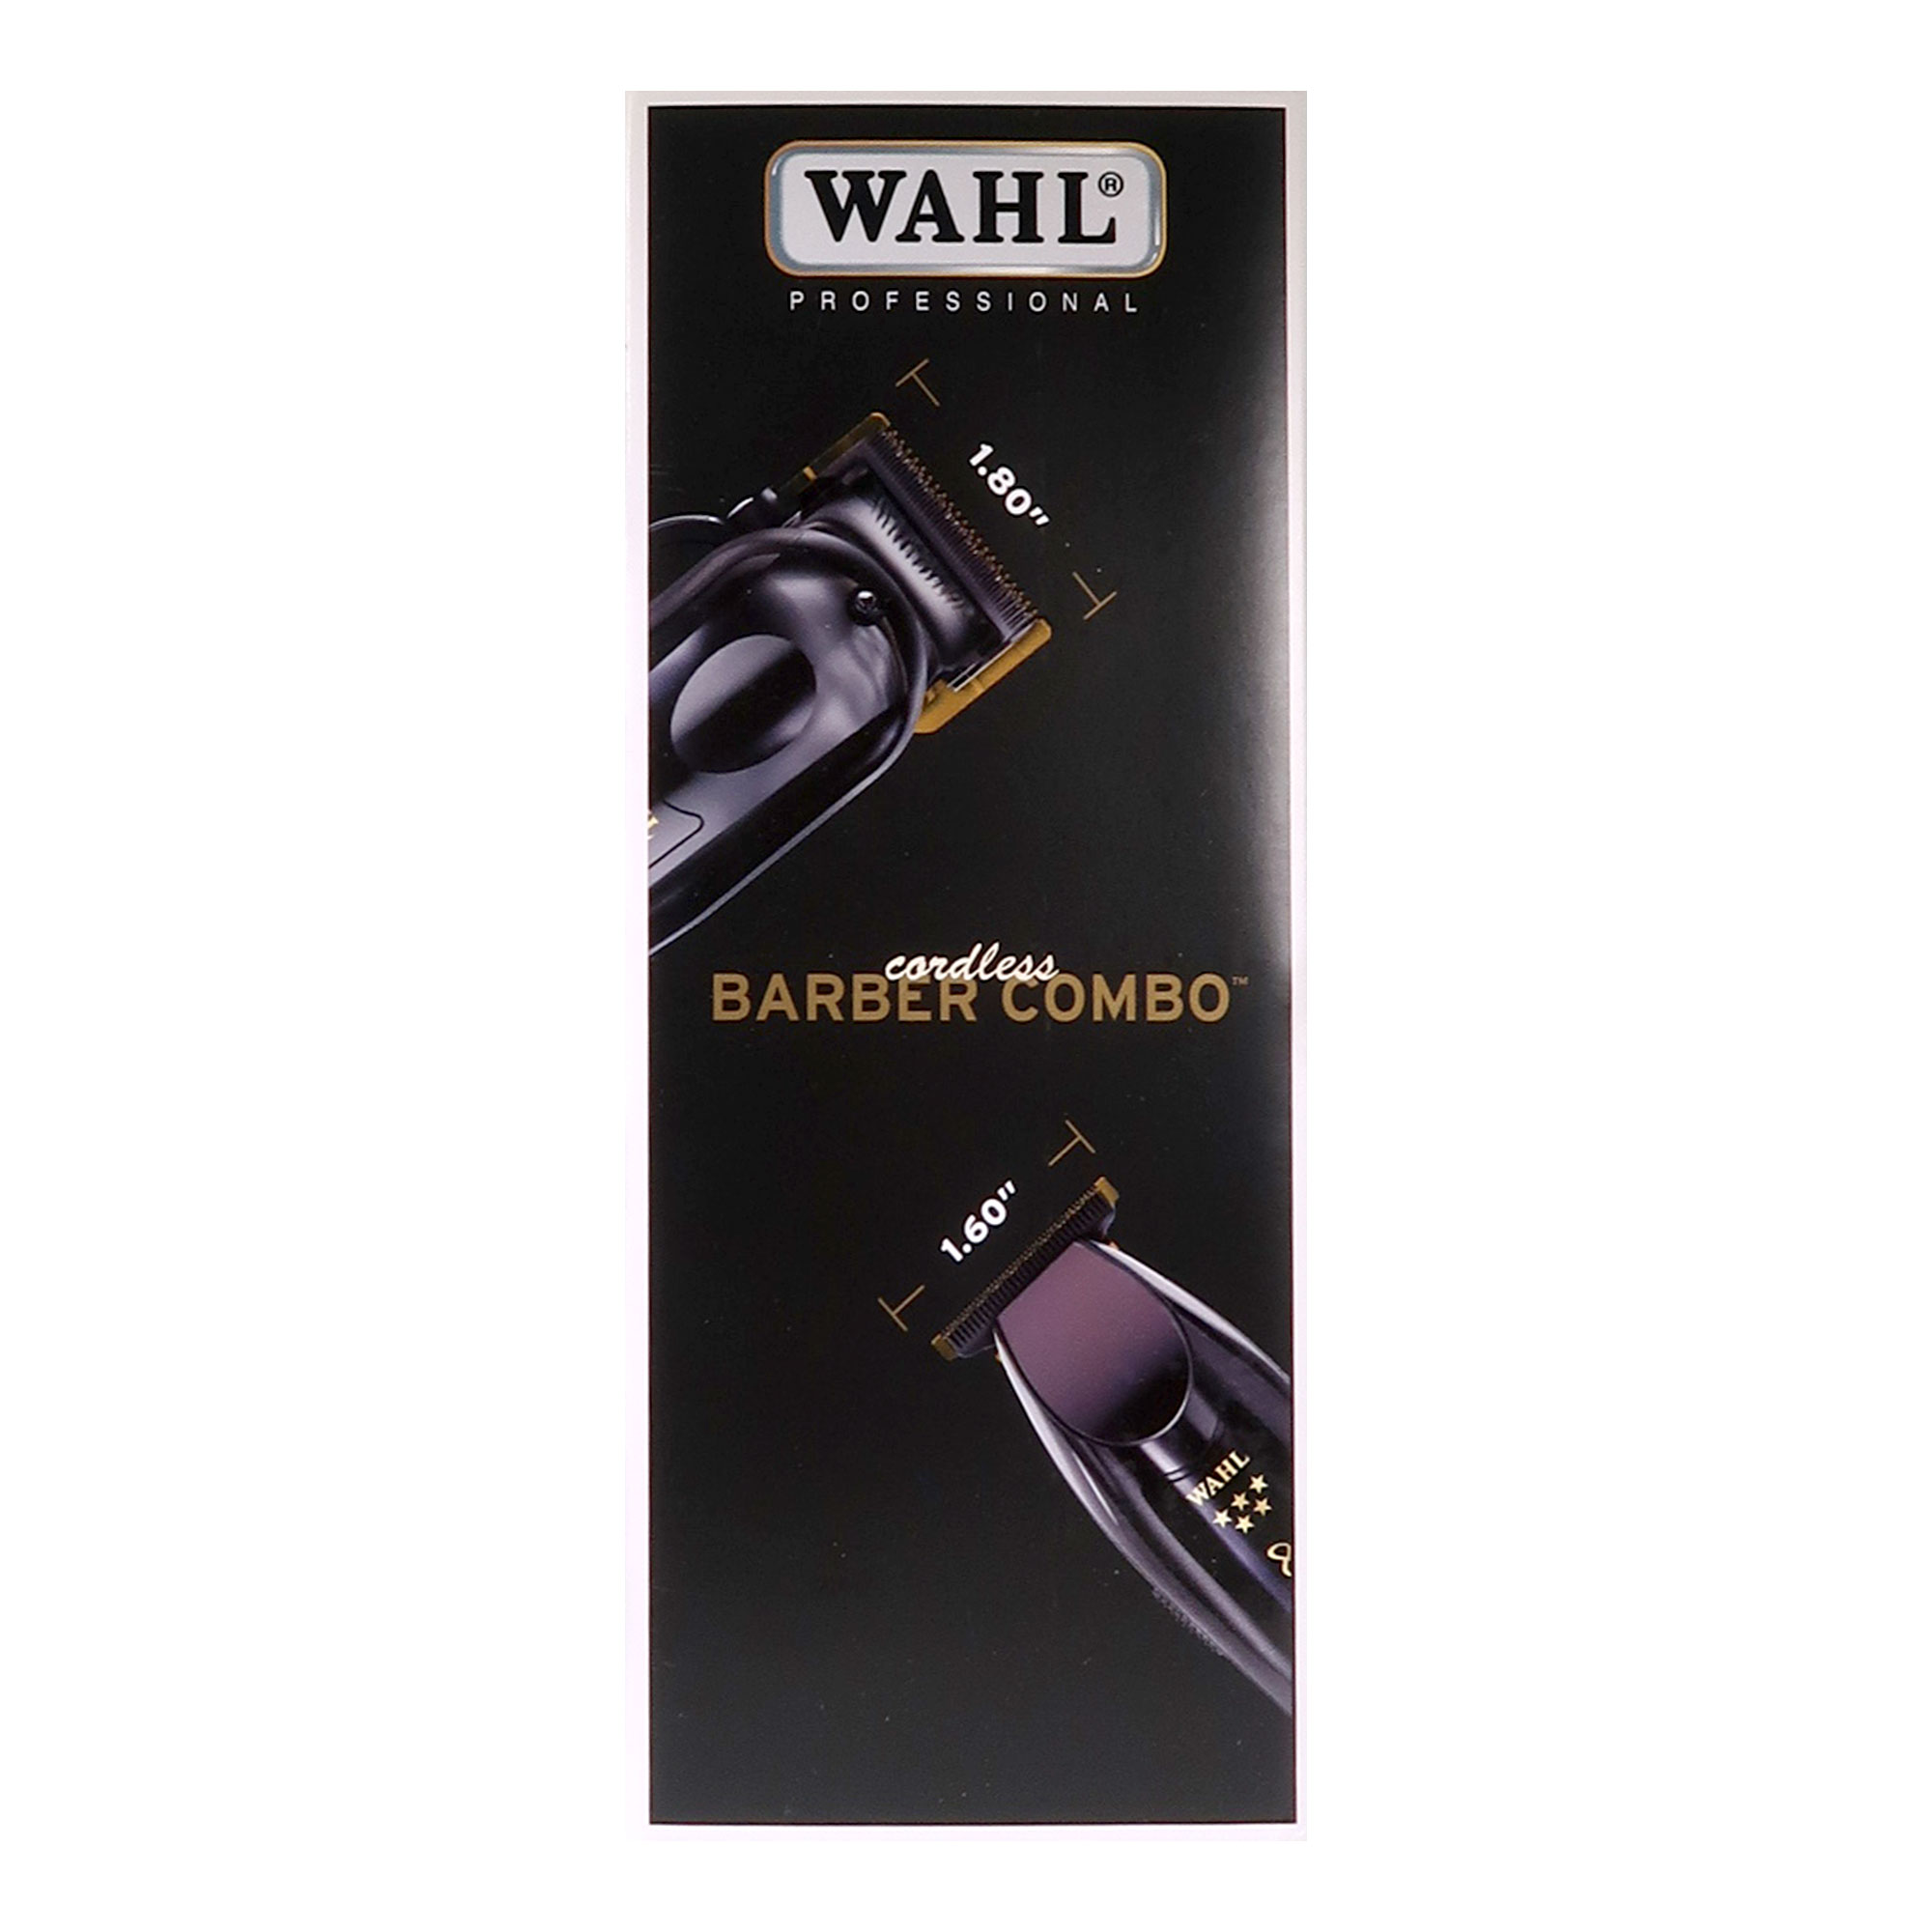 Wahl Barber Combo - 5 Star Cordless Magic Clip & Cordless Detailer Li #3025397